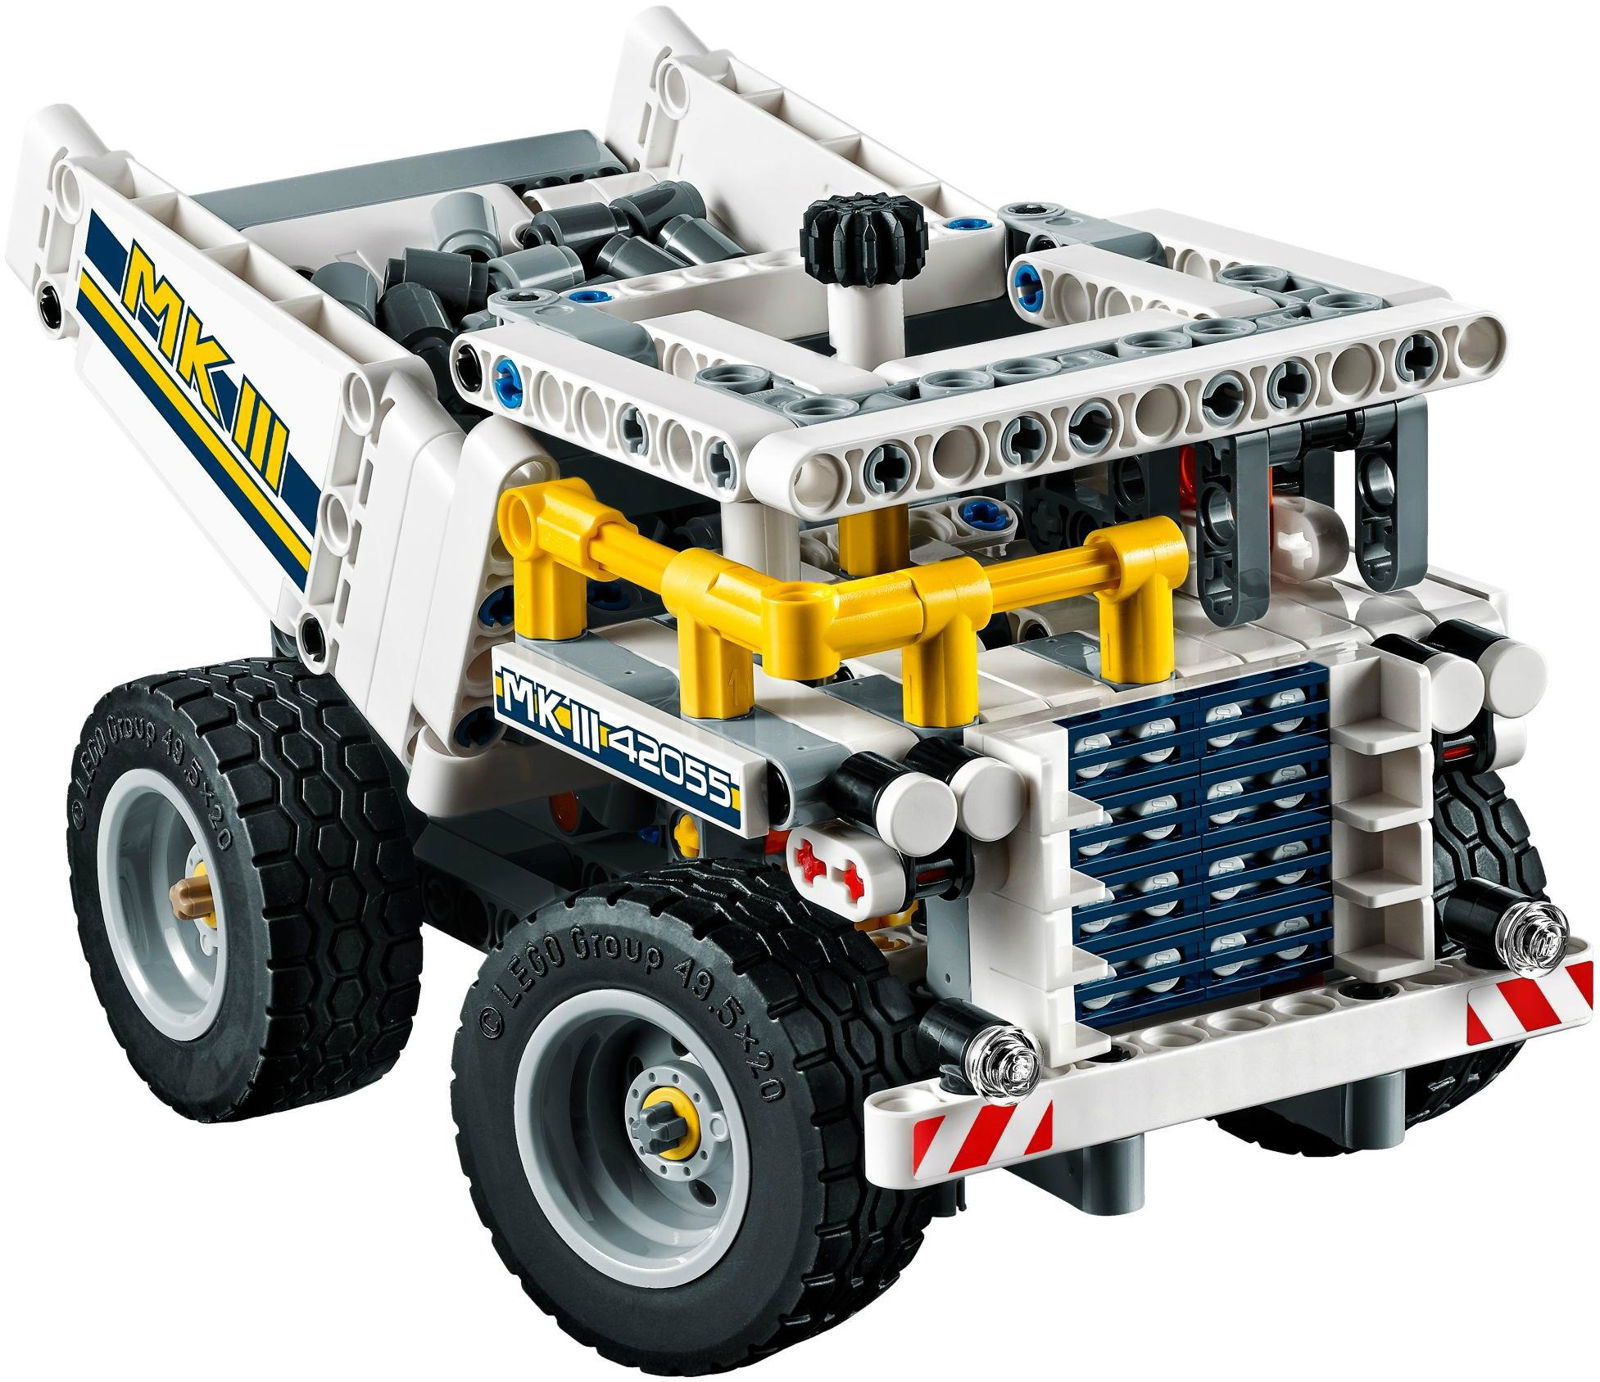 LEGO Technic 42055 Bucket Wheel Excavator Building Kit 5